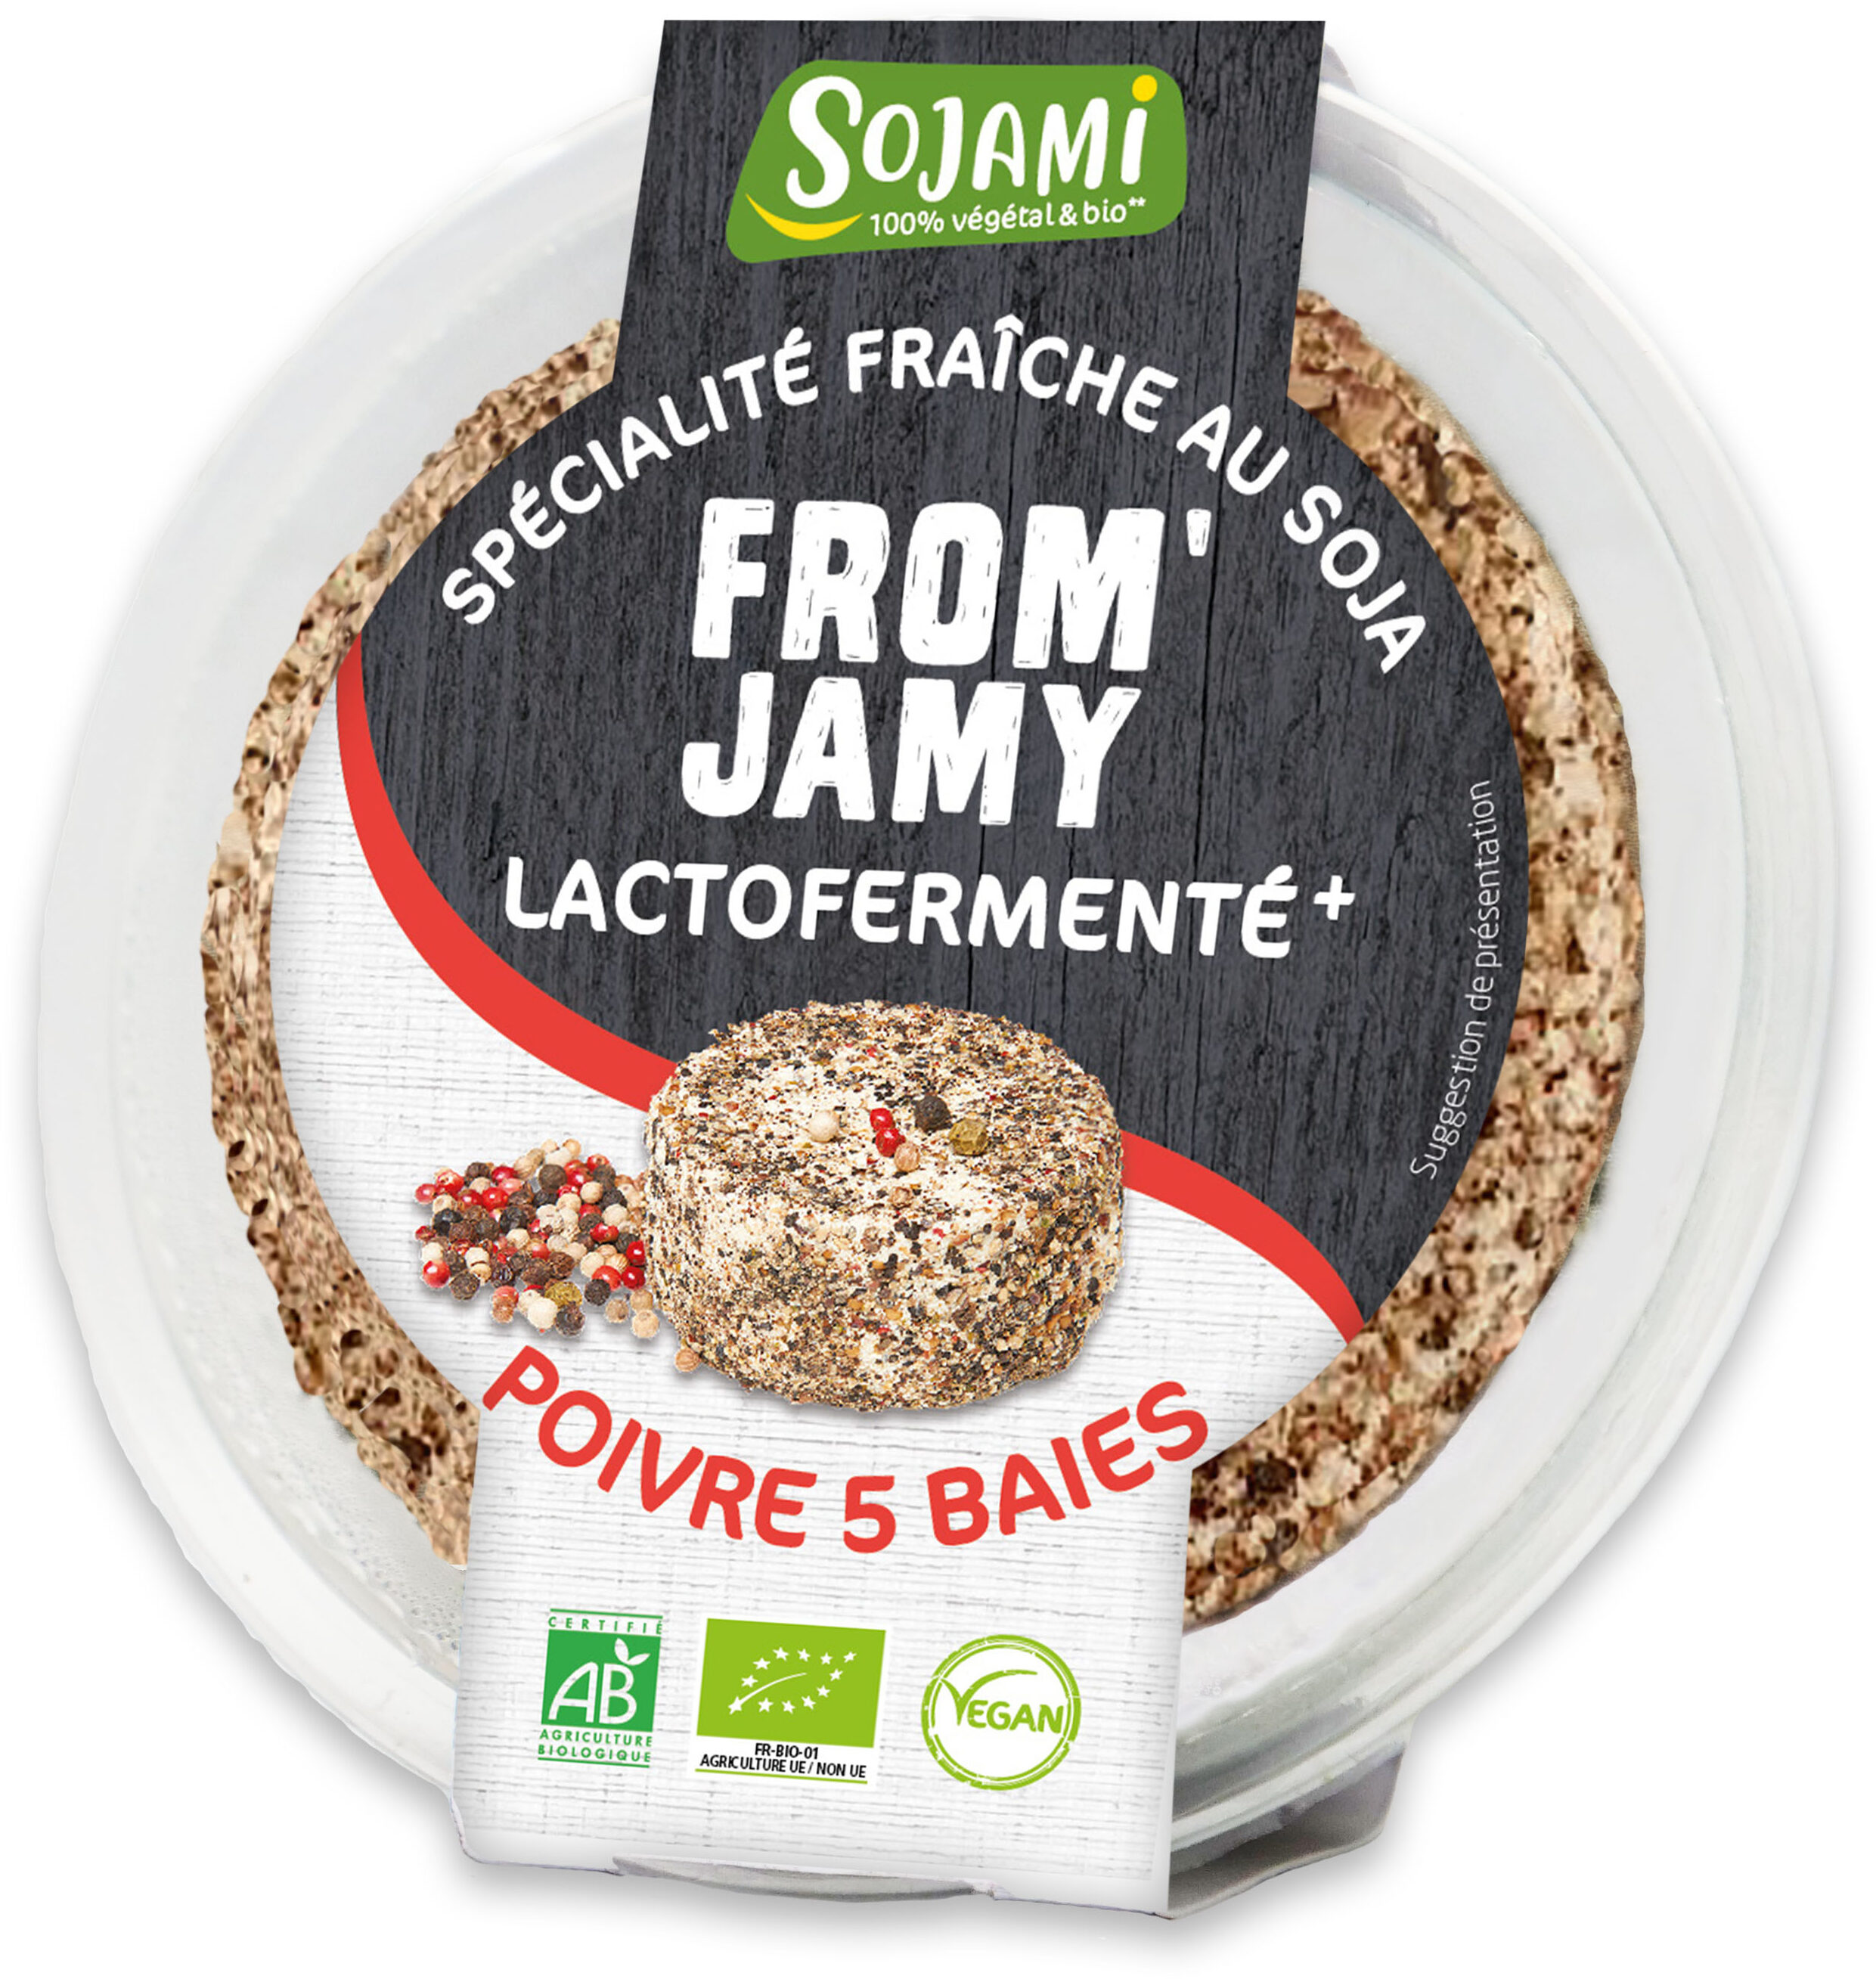 From'Jamy poivre 5 baies - Produkt - fr